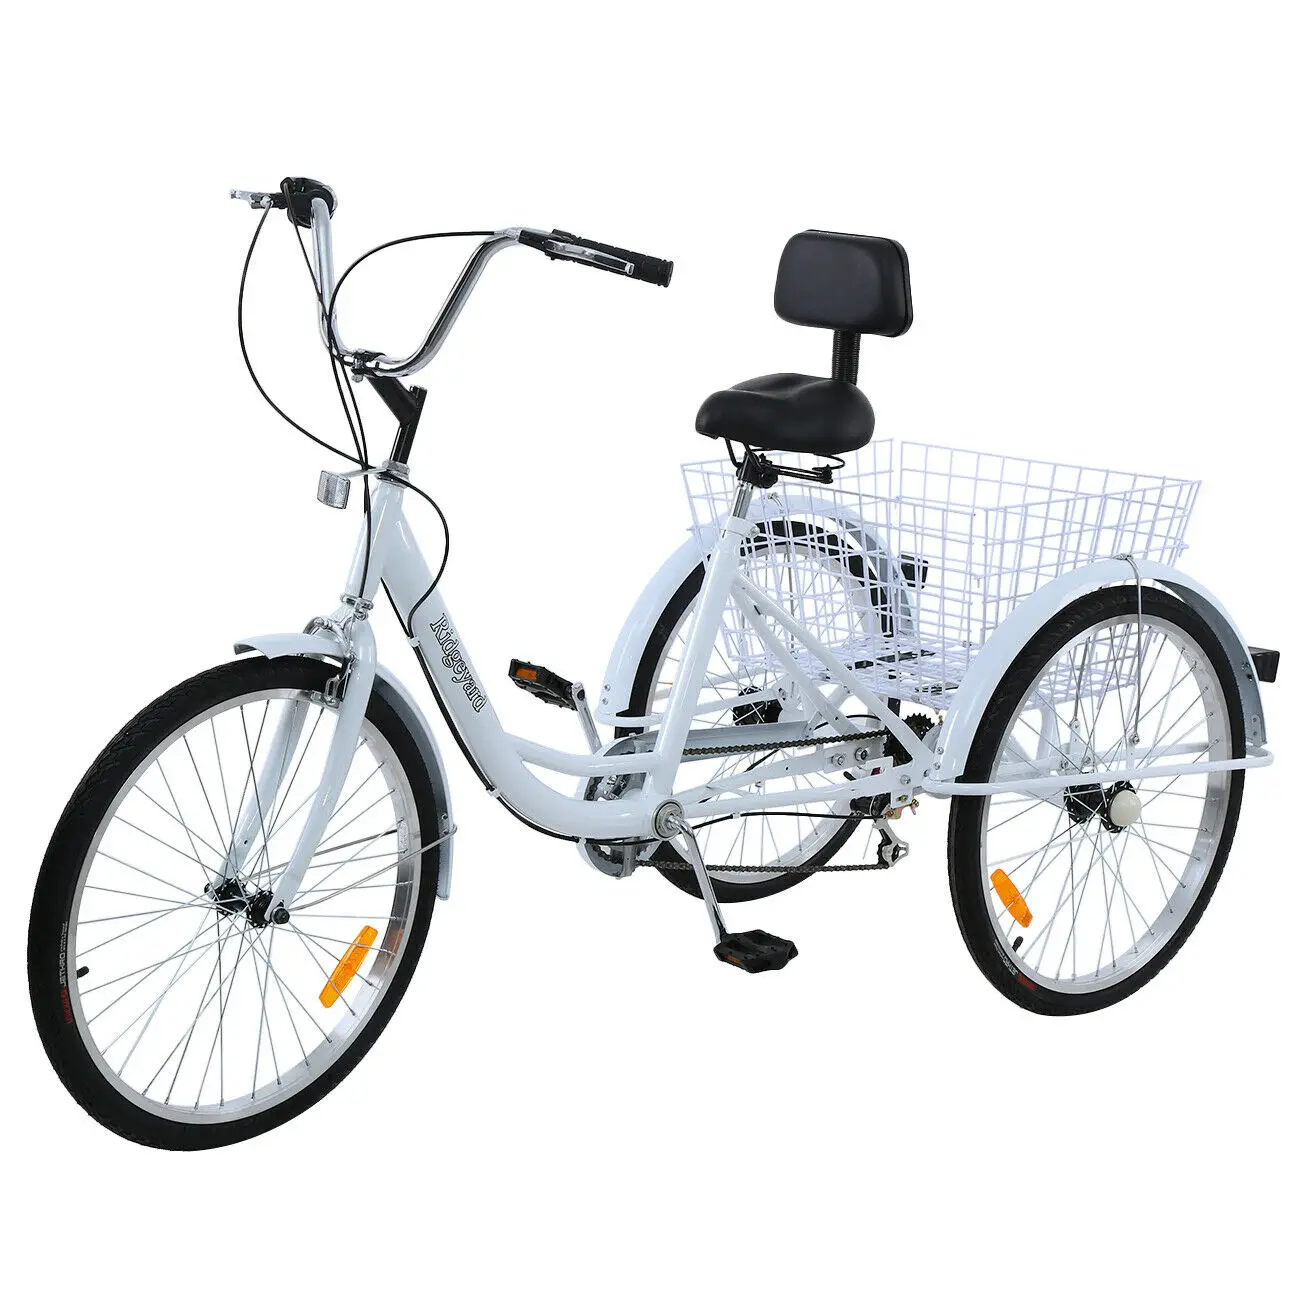 Ridgeyard 24" Adult Tricycle 3-Wheel Shimano 7 Speed Bicycle Trike Cruiser BLK 